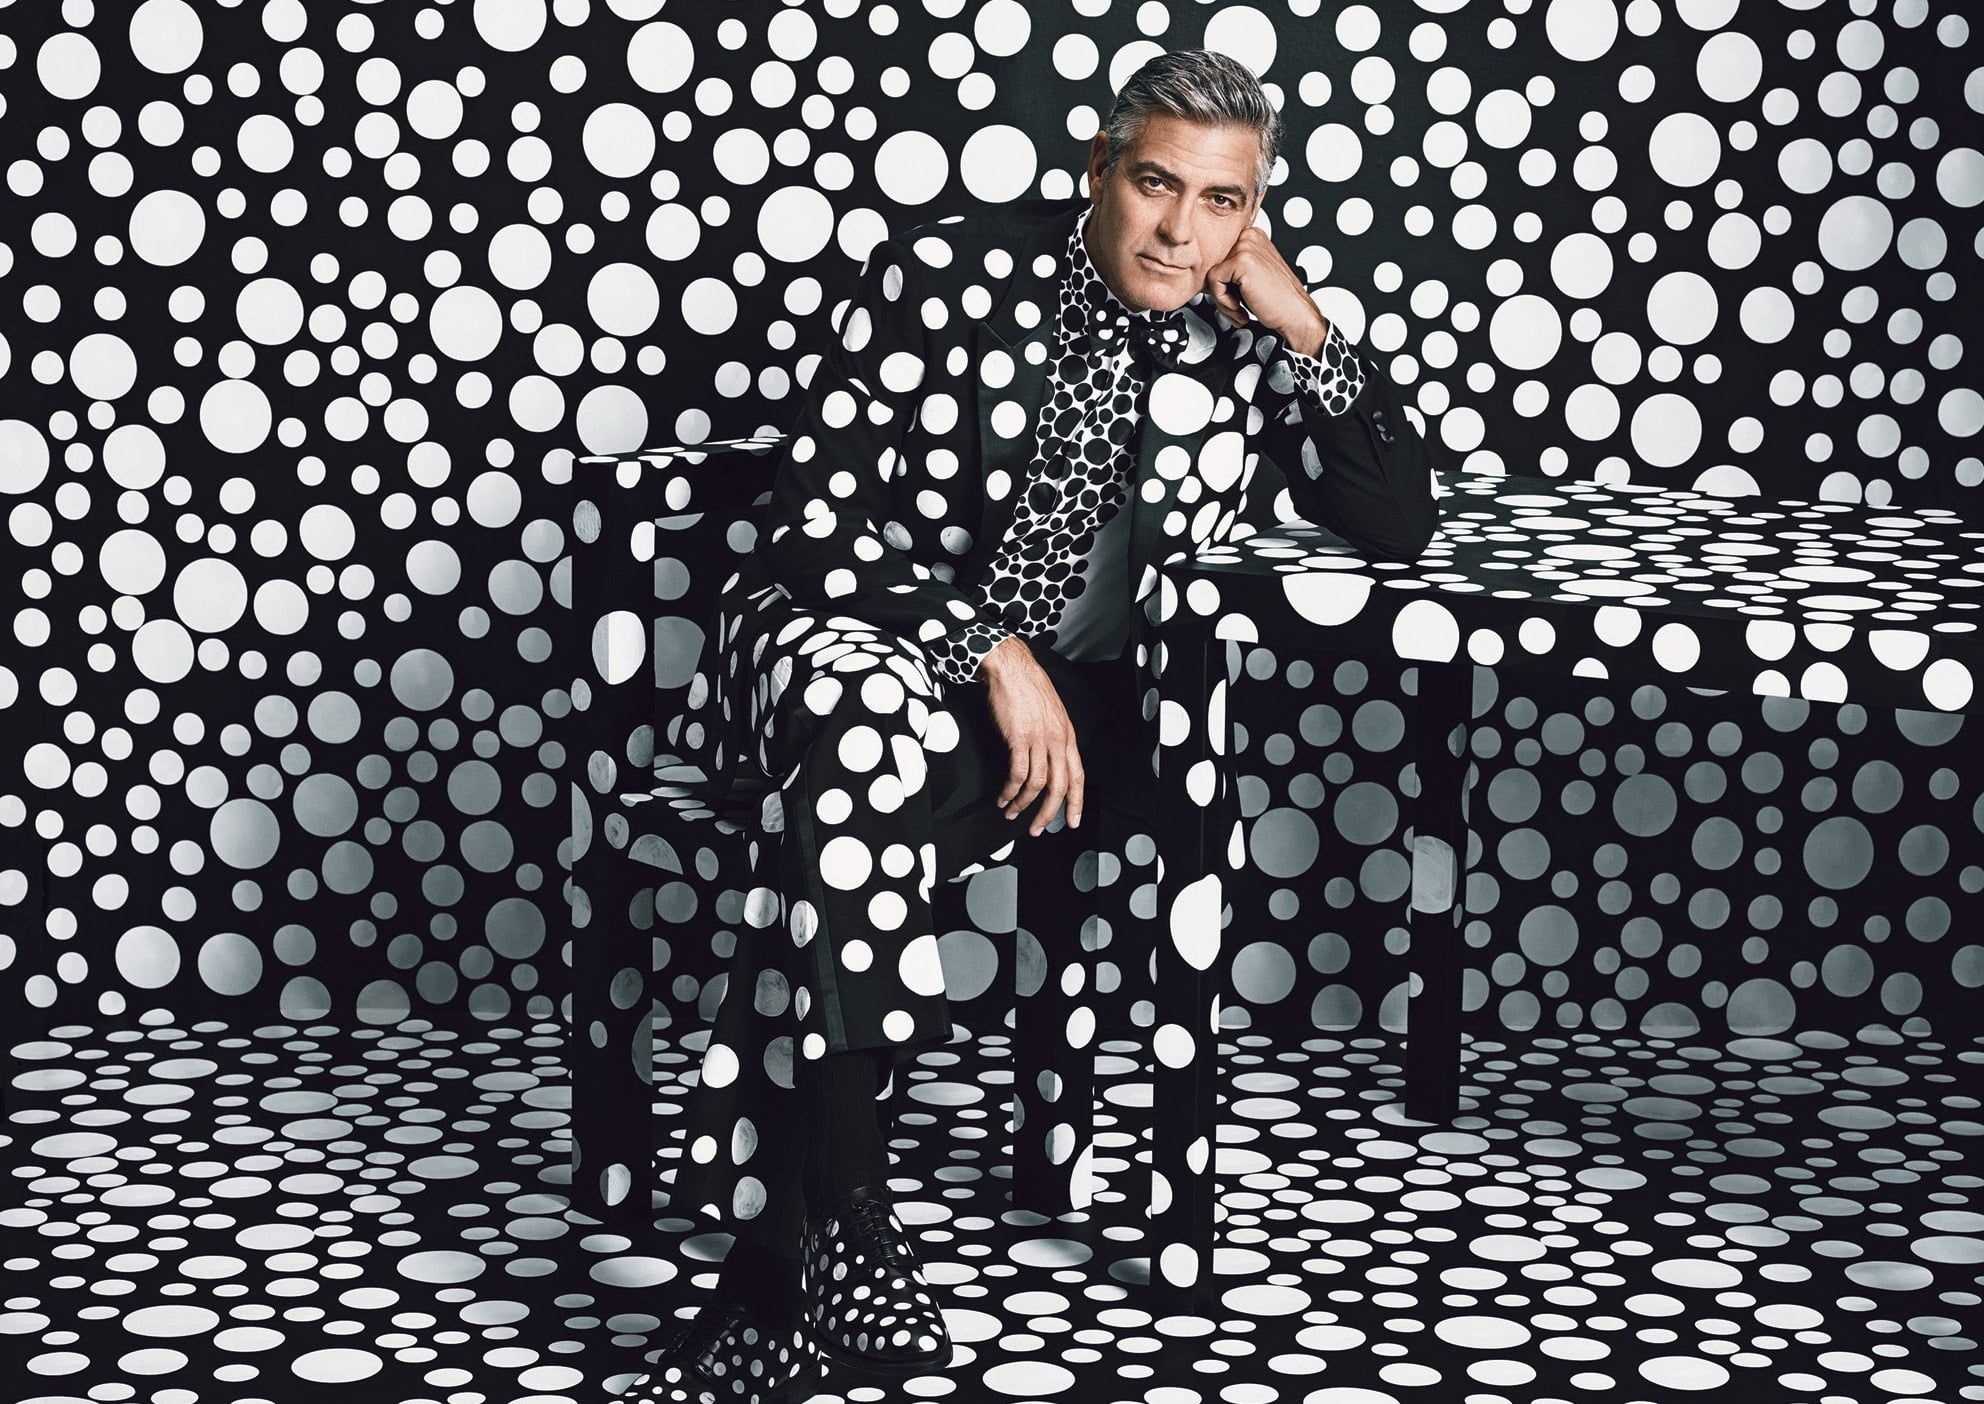 George Clooney, Actor photo shoot, Pea texture, Polka dot shirt, 1990x1410 HD Desktop